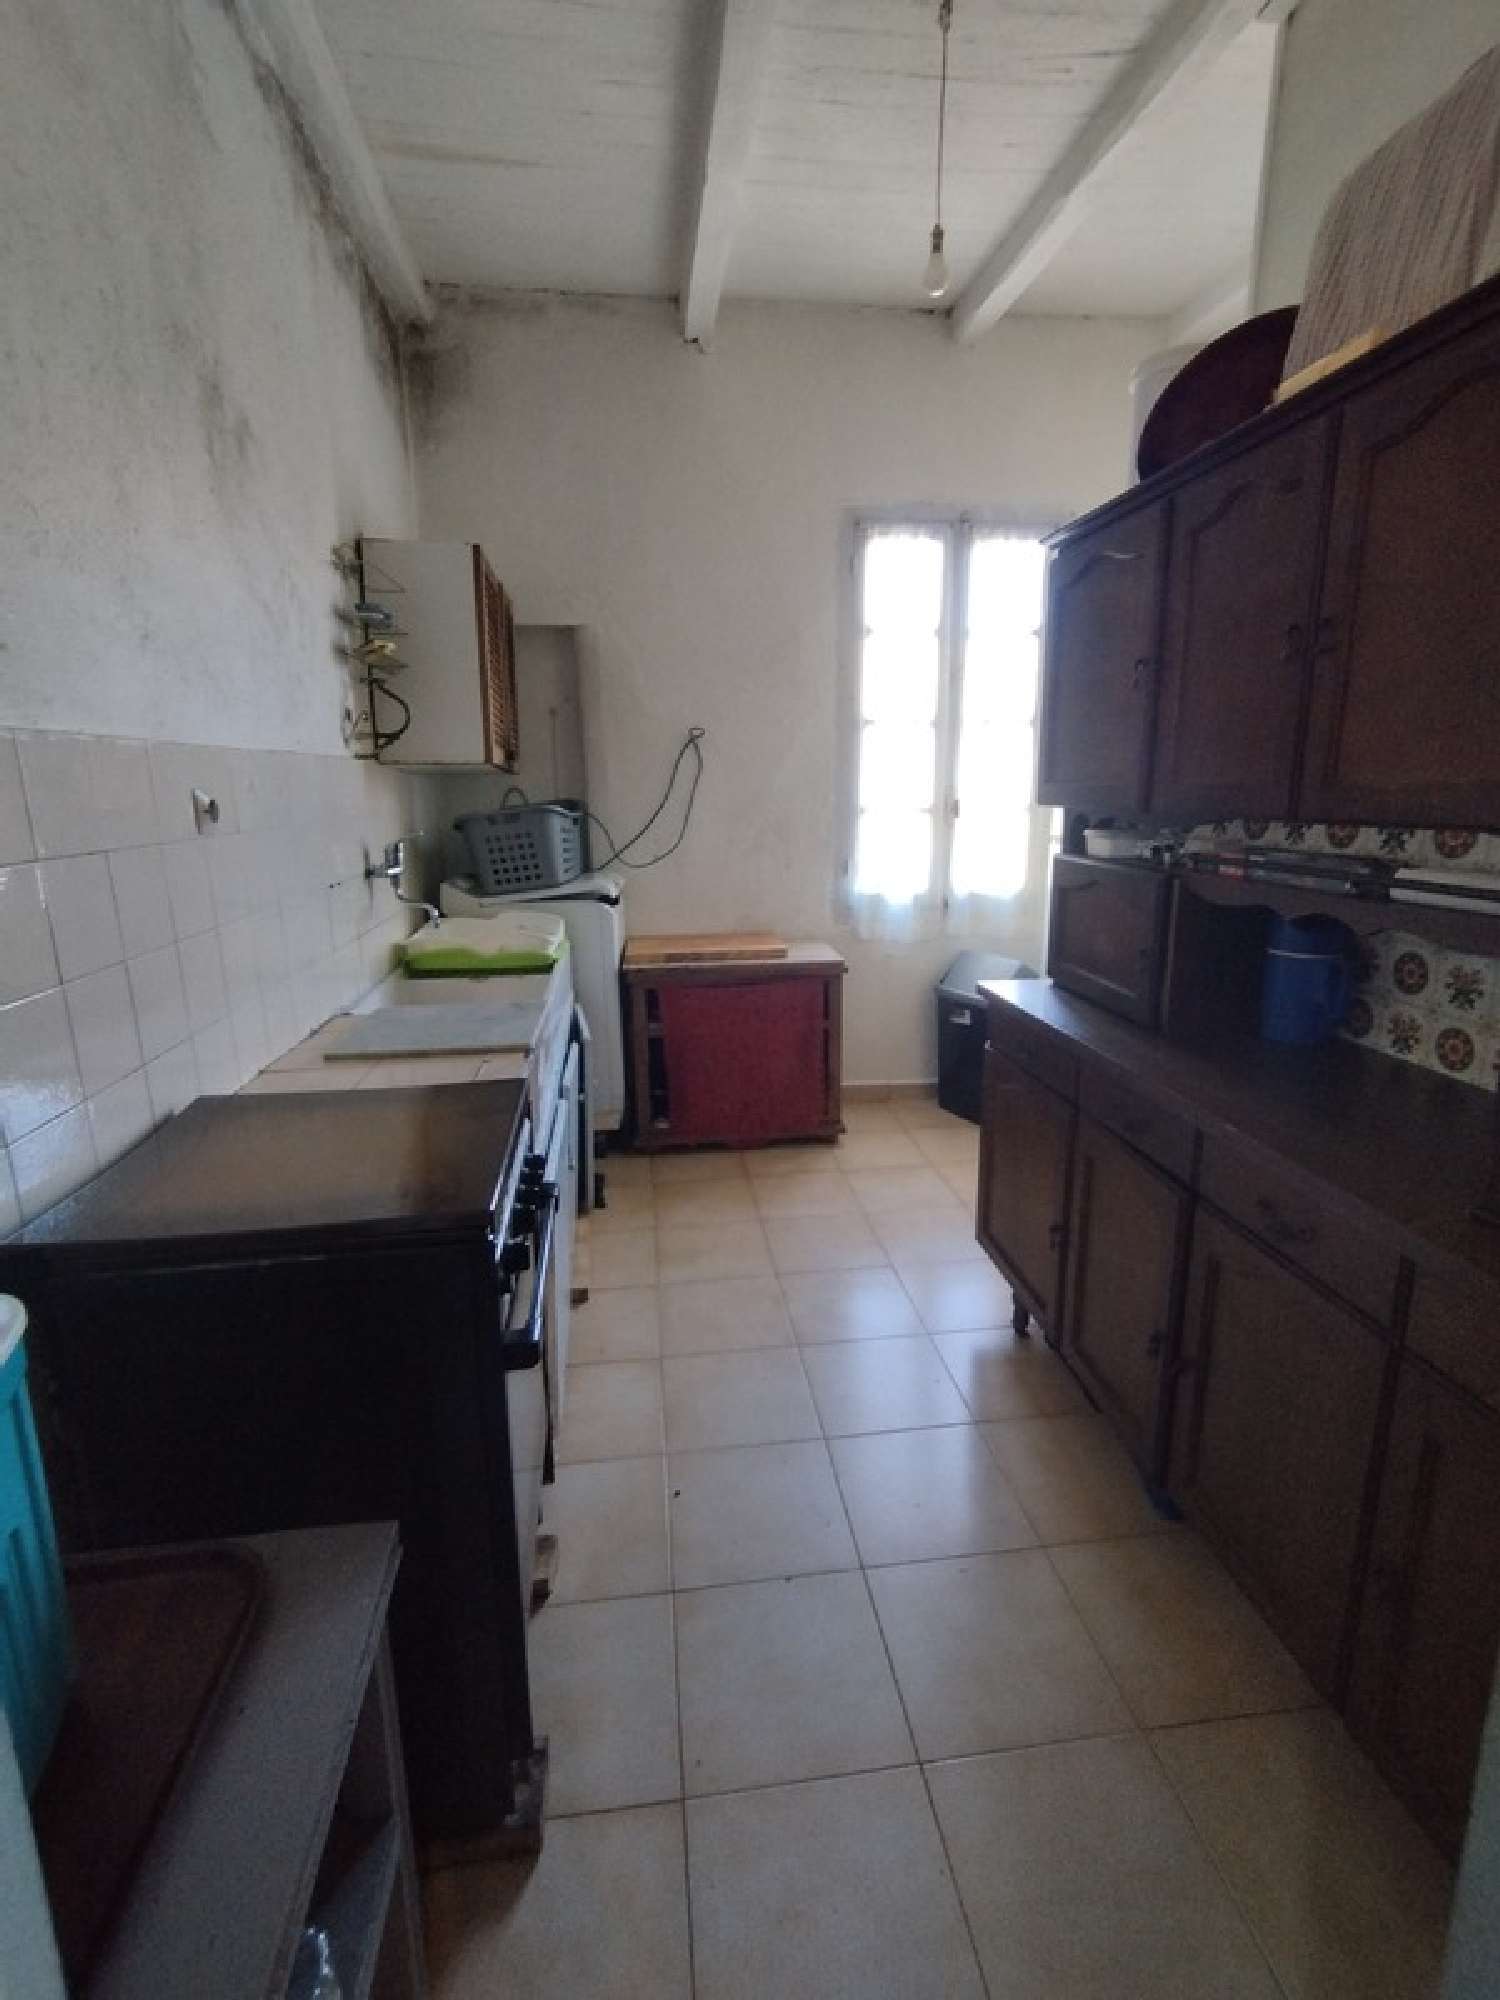  à vendre appartement Quenza Corse-du-Sud 2